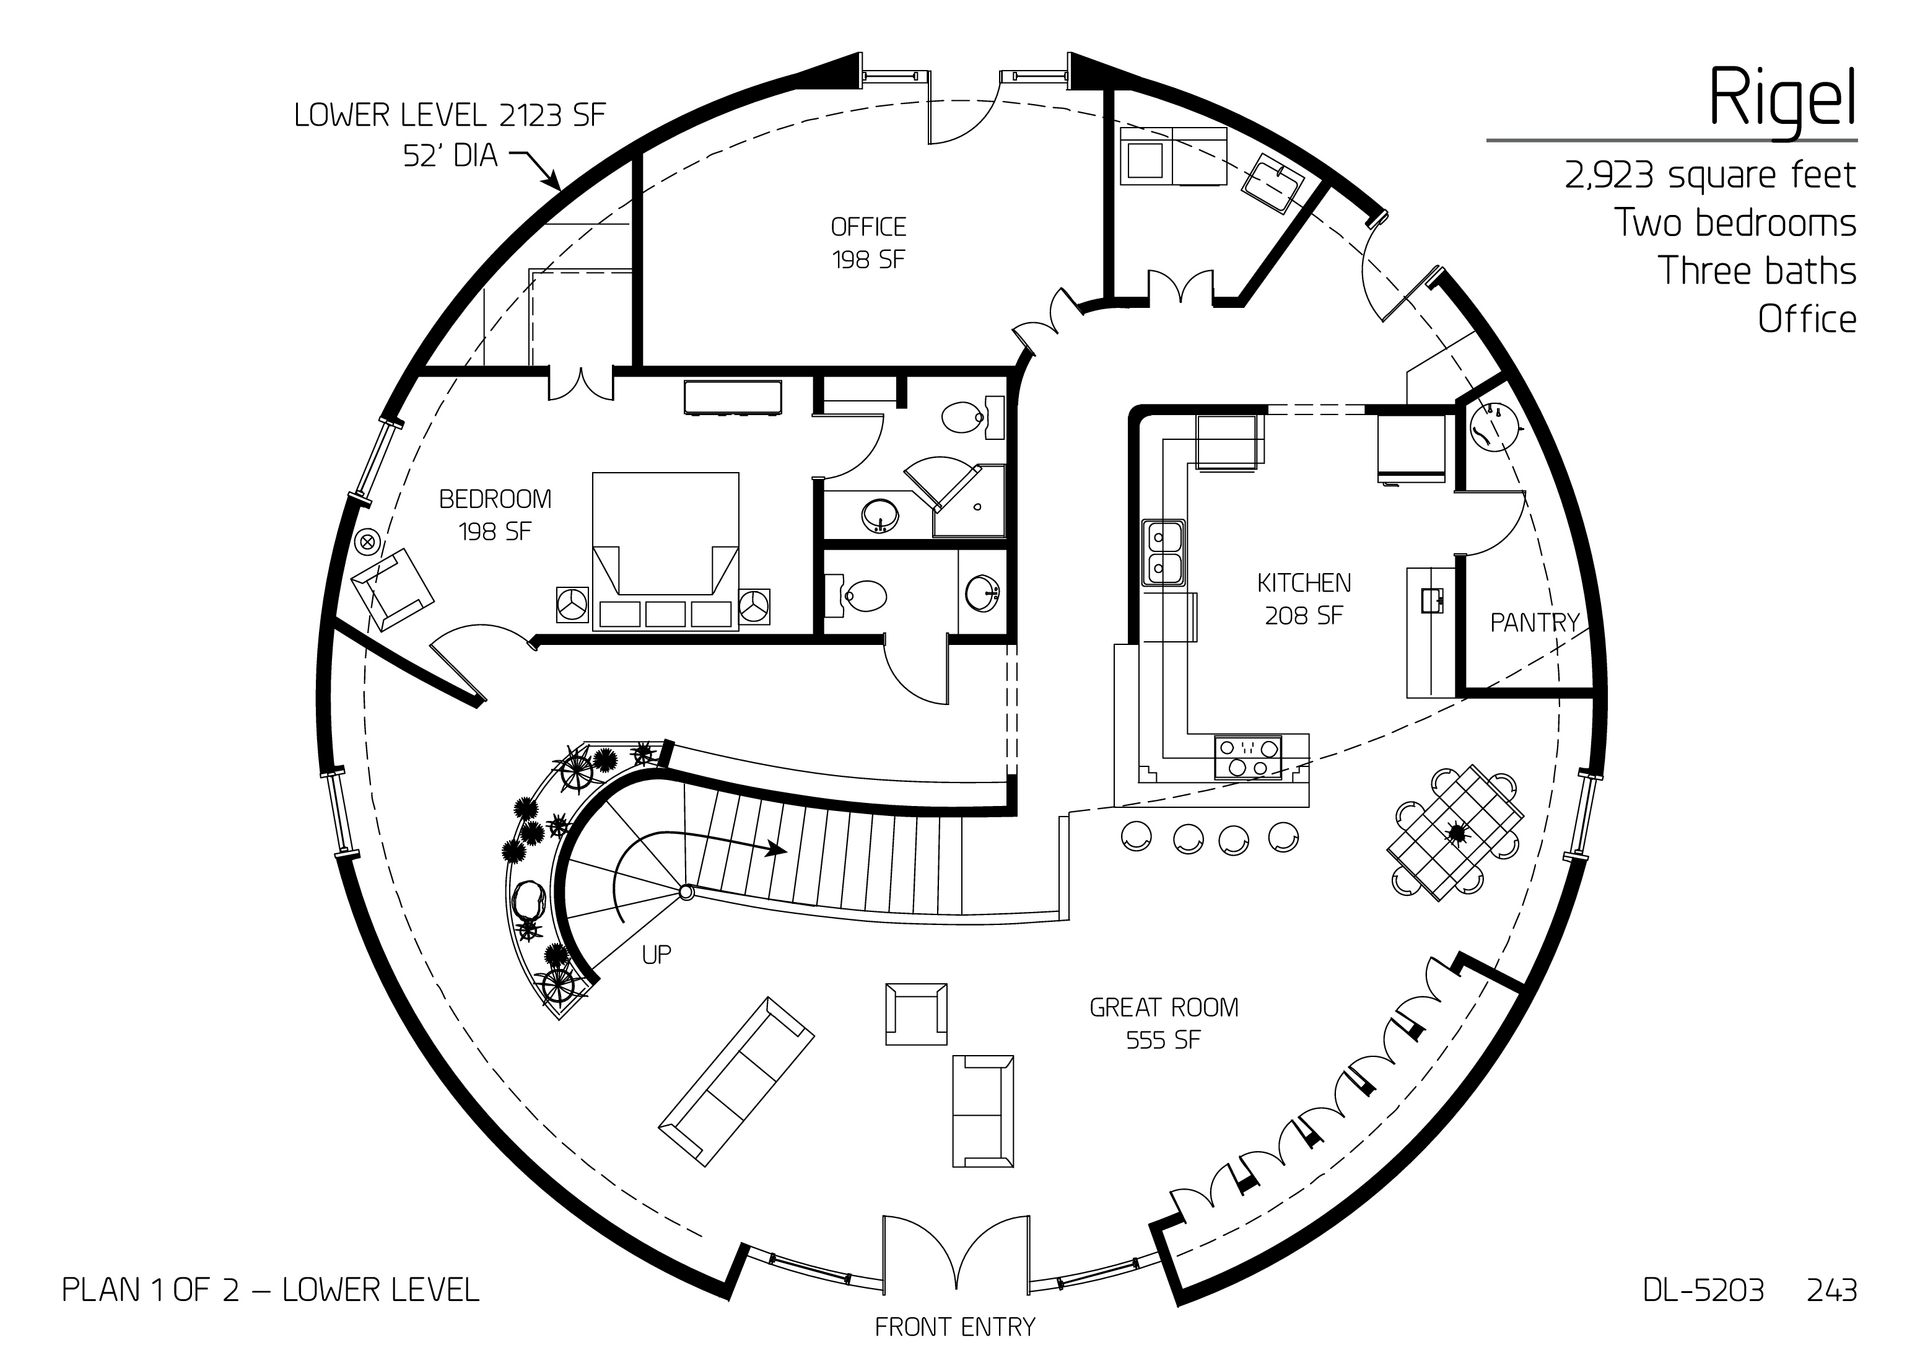 Rigel: Main floor of a 52' Diameter, 2,923 SF, Two-Bedroom, Two and a Half-Bath Floor Plan.